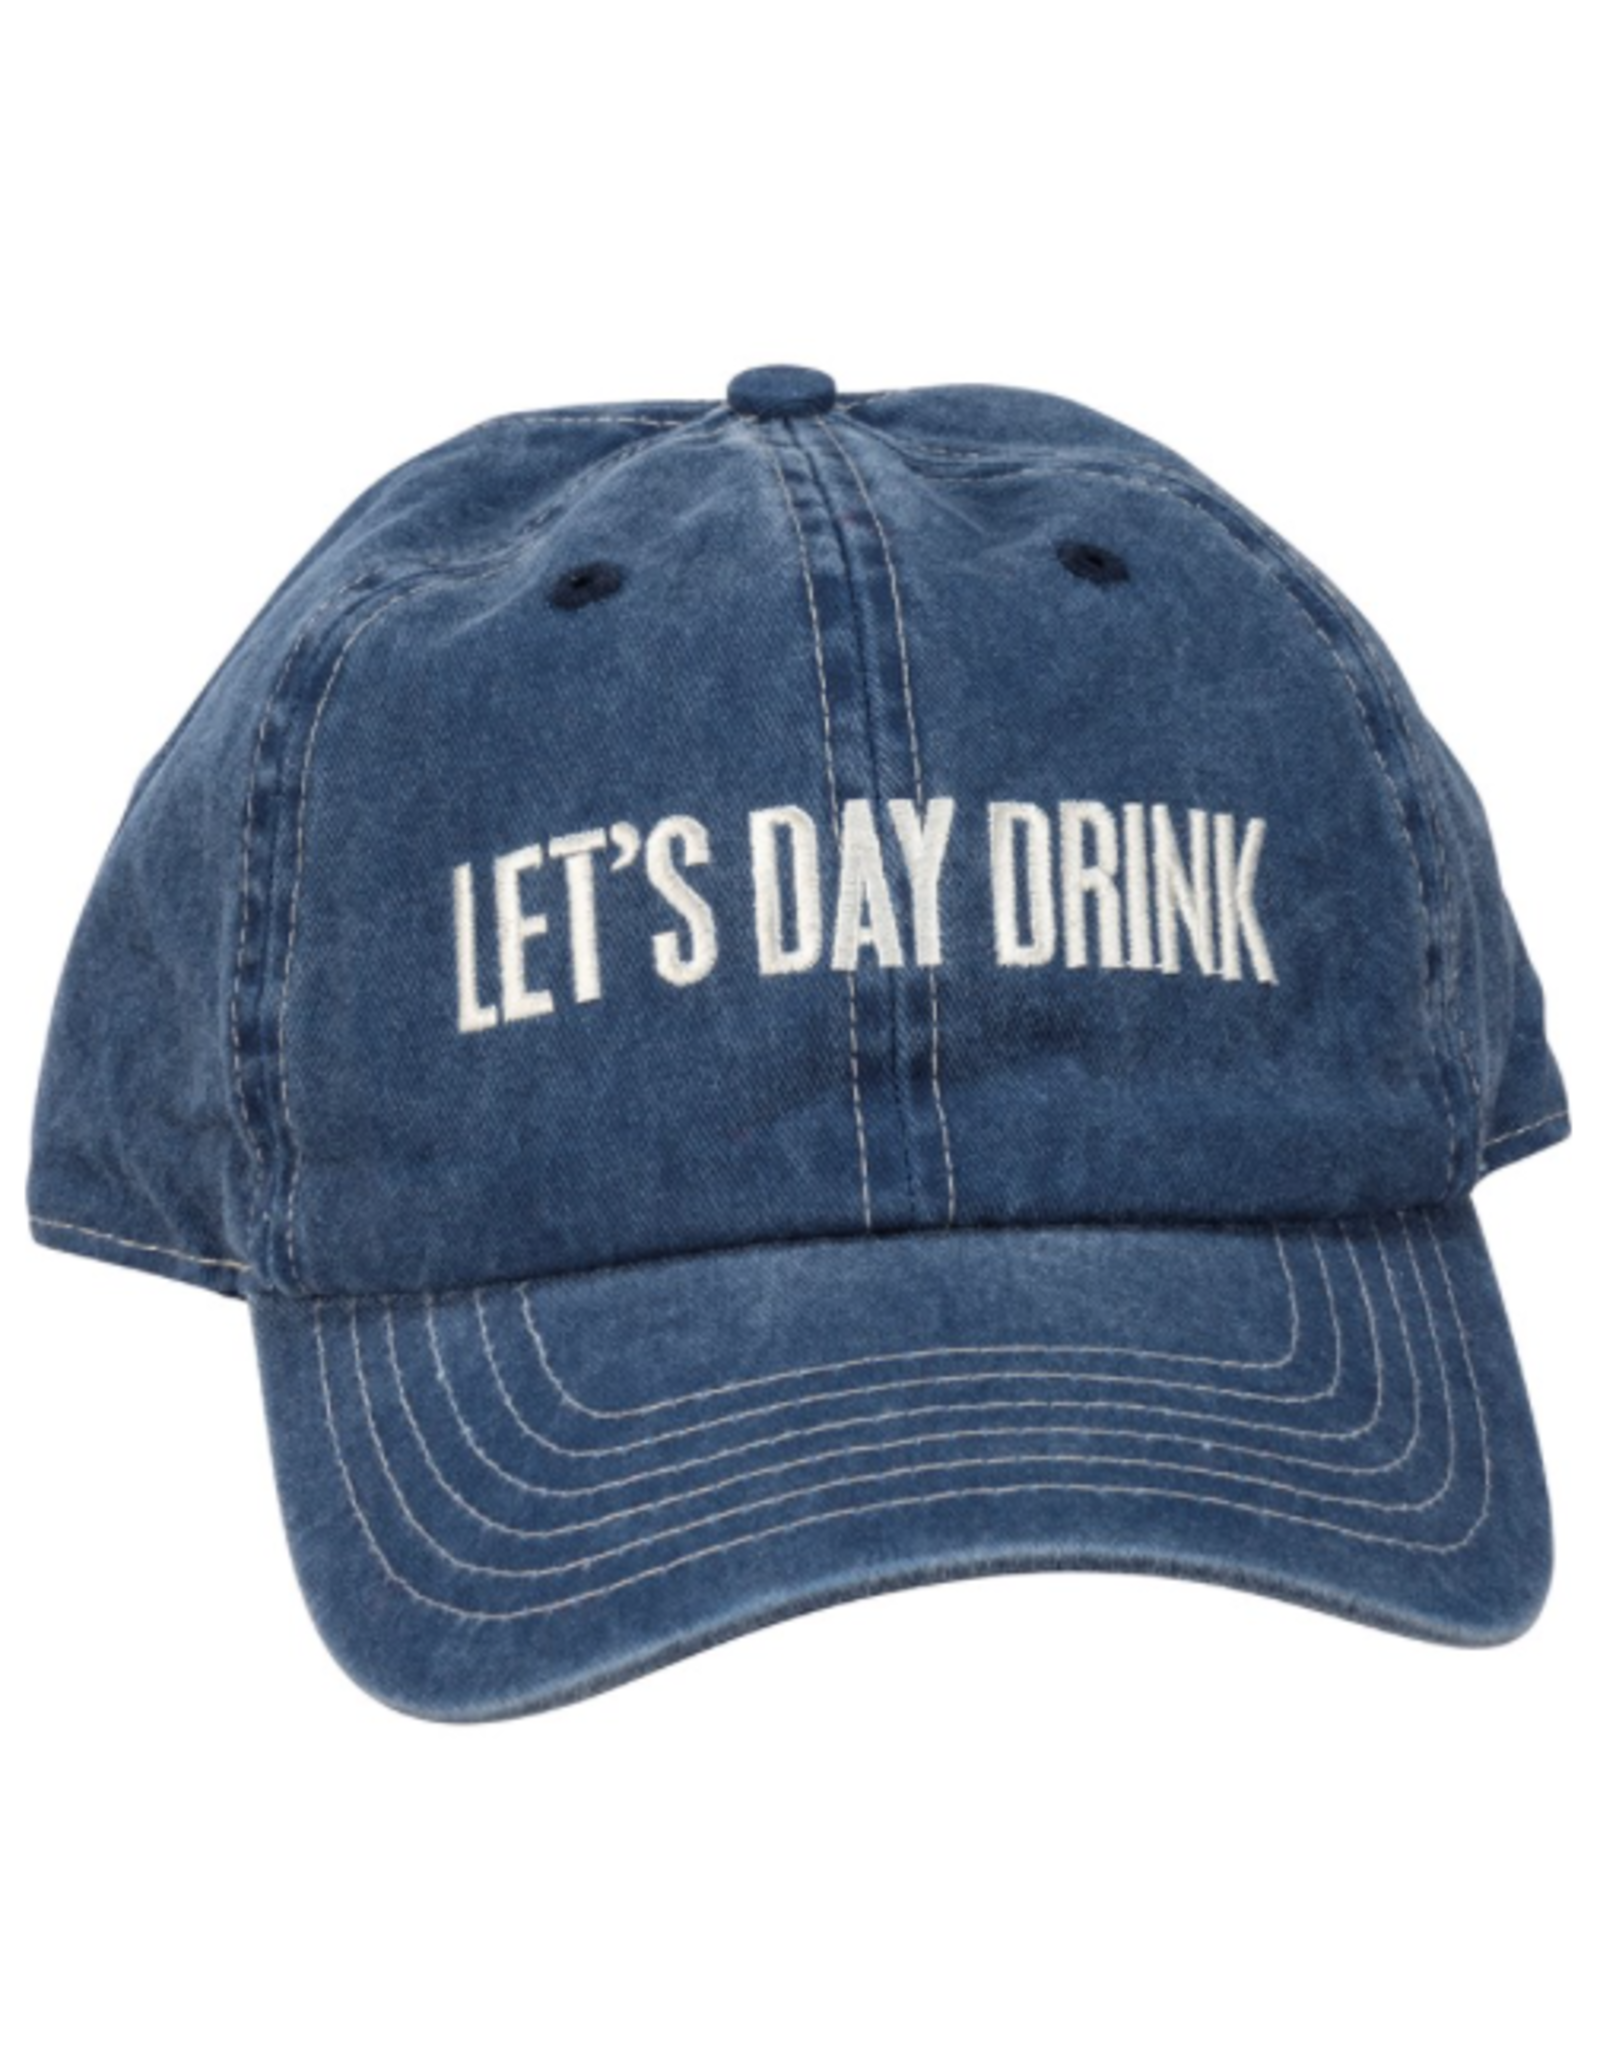 Baseball Cap, Let's Day Drink